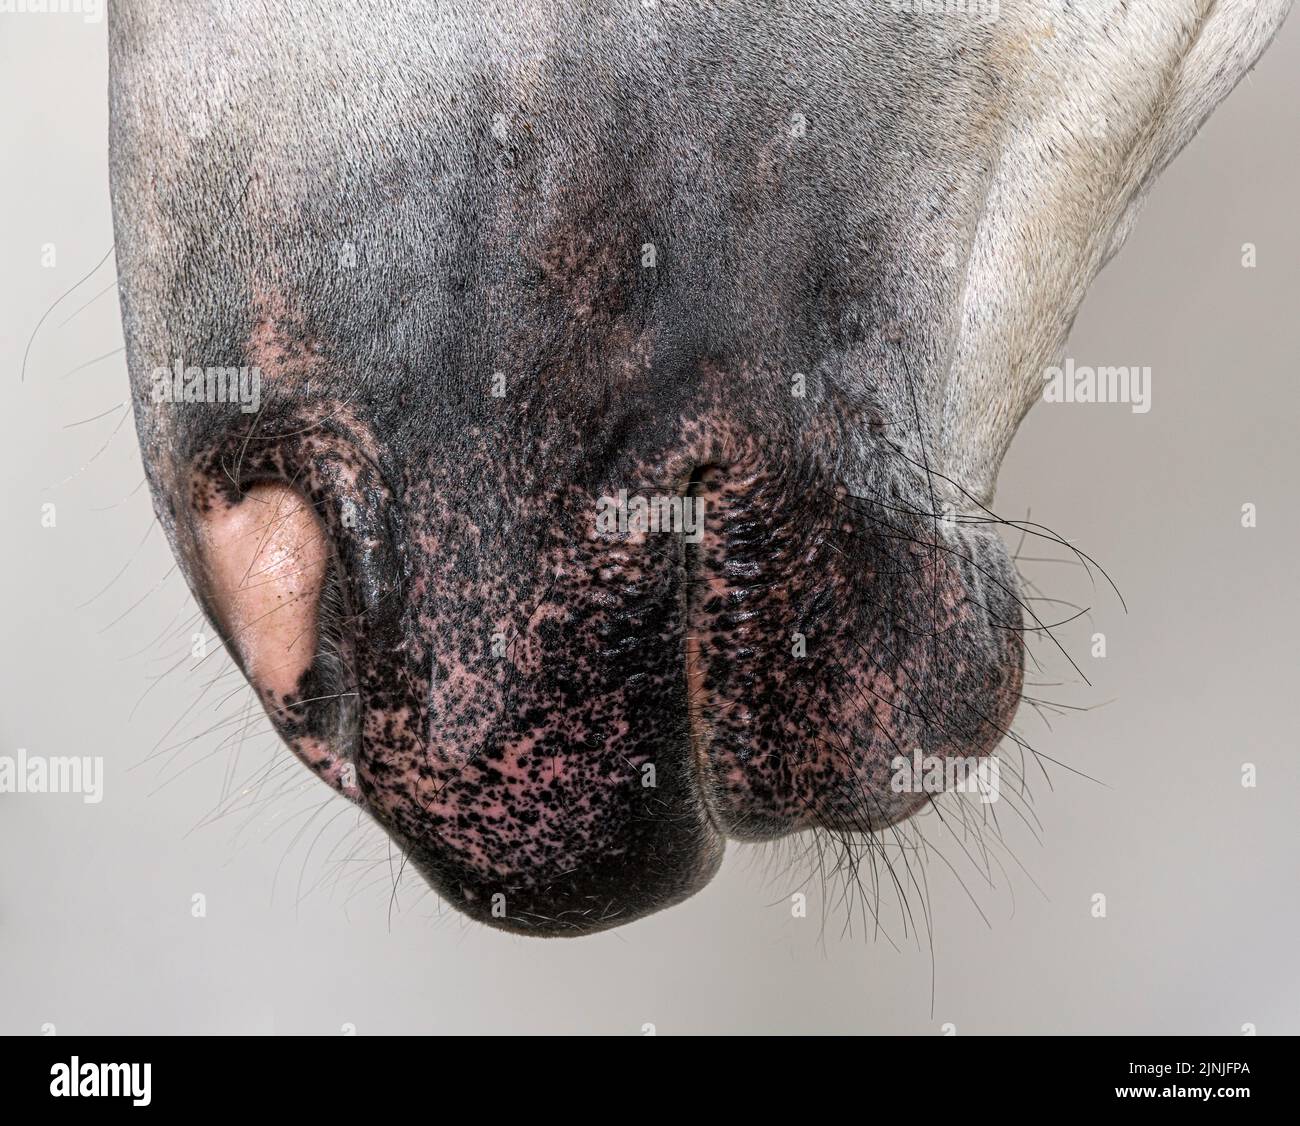 https://c8.alamy.com/comp/2JNJFPA/close-up-on-the-nose-and-nostrils-of-a-lusitano-horse-2JNJFPA.jpg